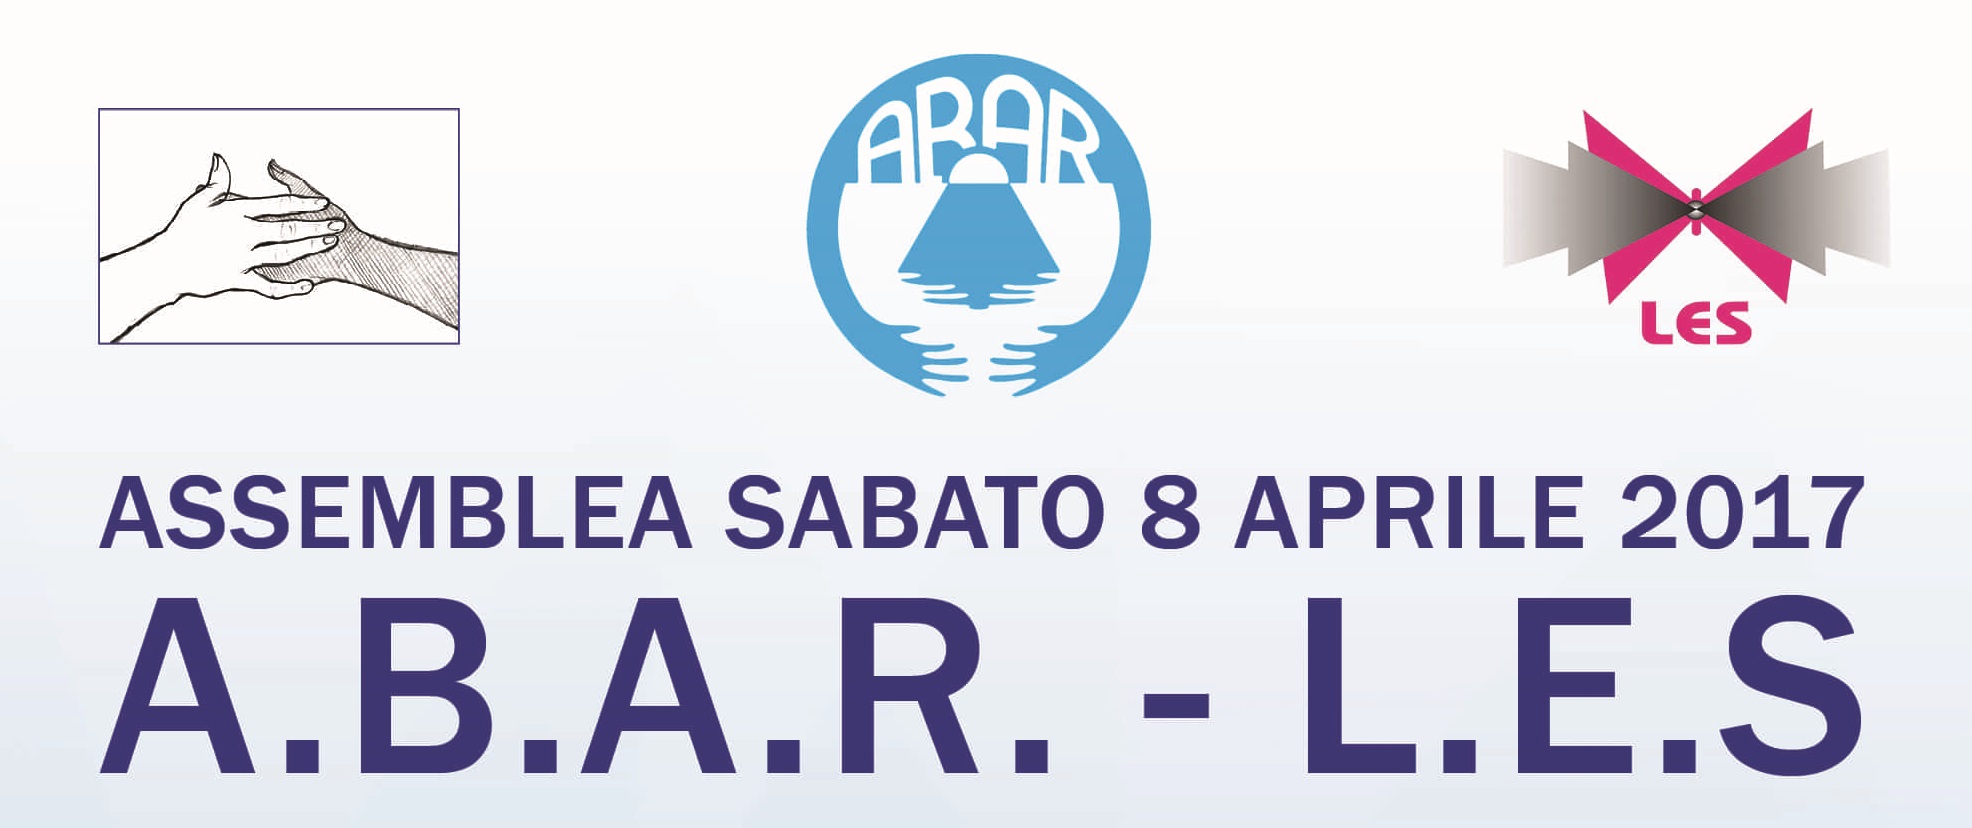 Assemblea annuale ABAR 2017